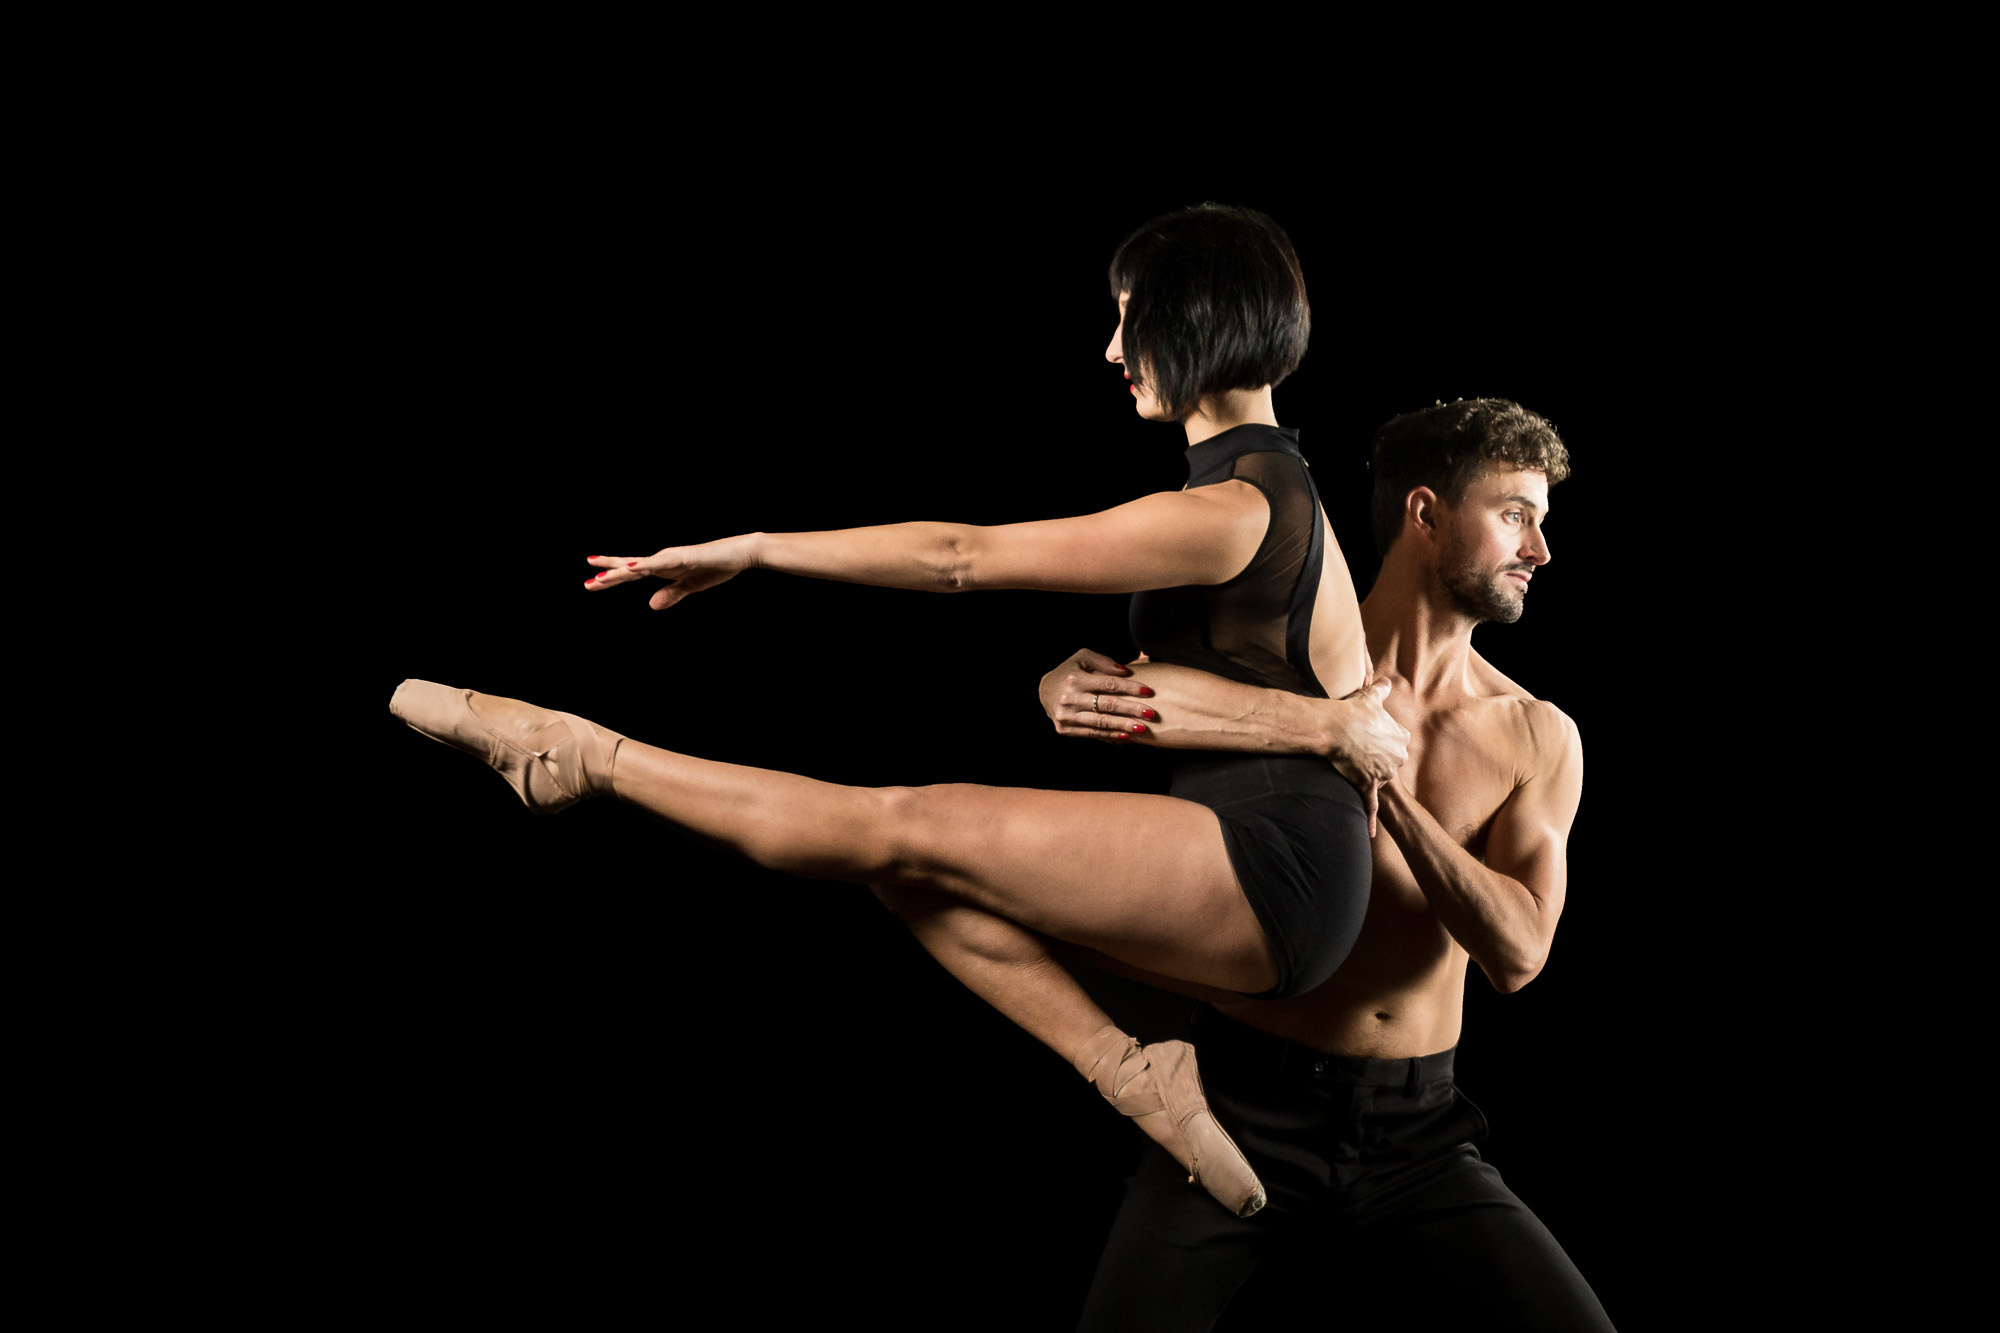 Jazz Dance: London Choreographer, Athletic activity, Ballet-inspired moves, Dance company. 2000x1340 HD Wallpaper.